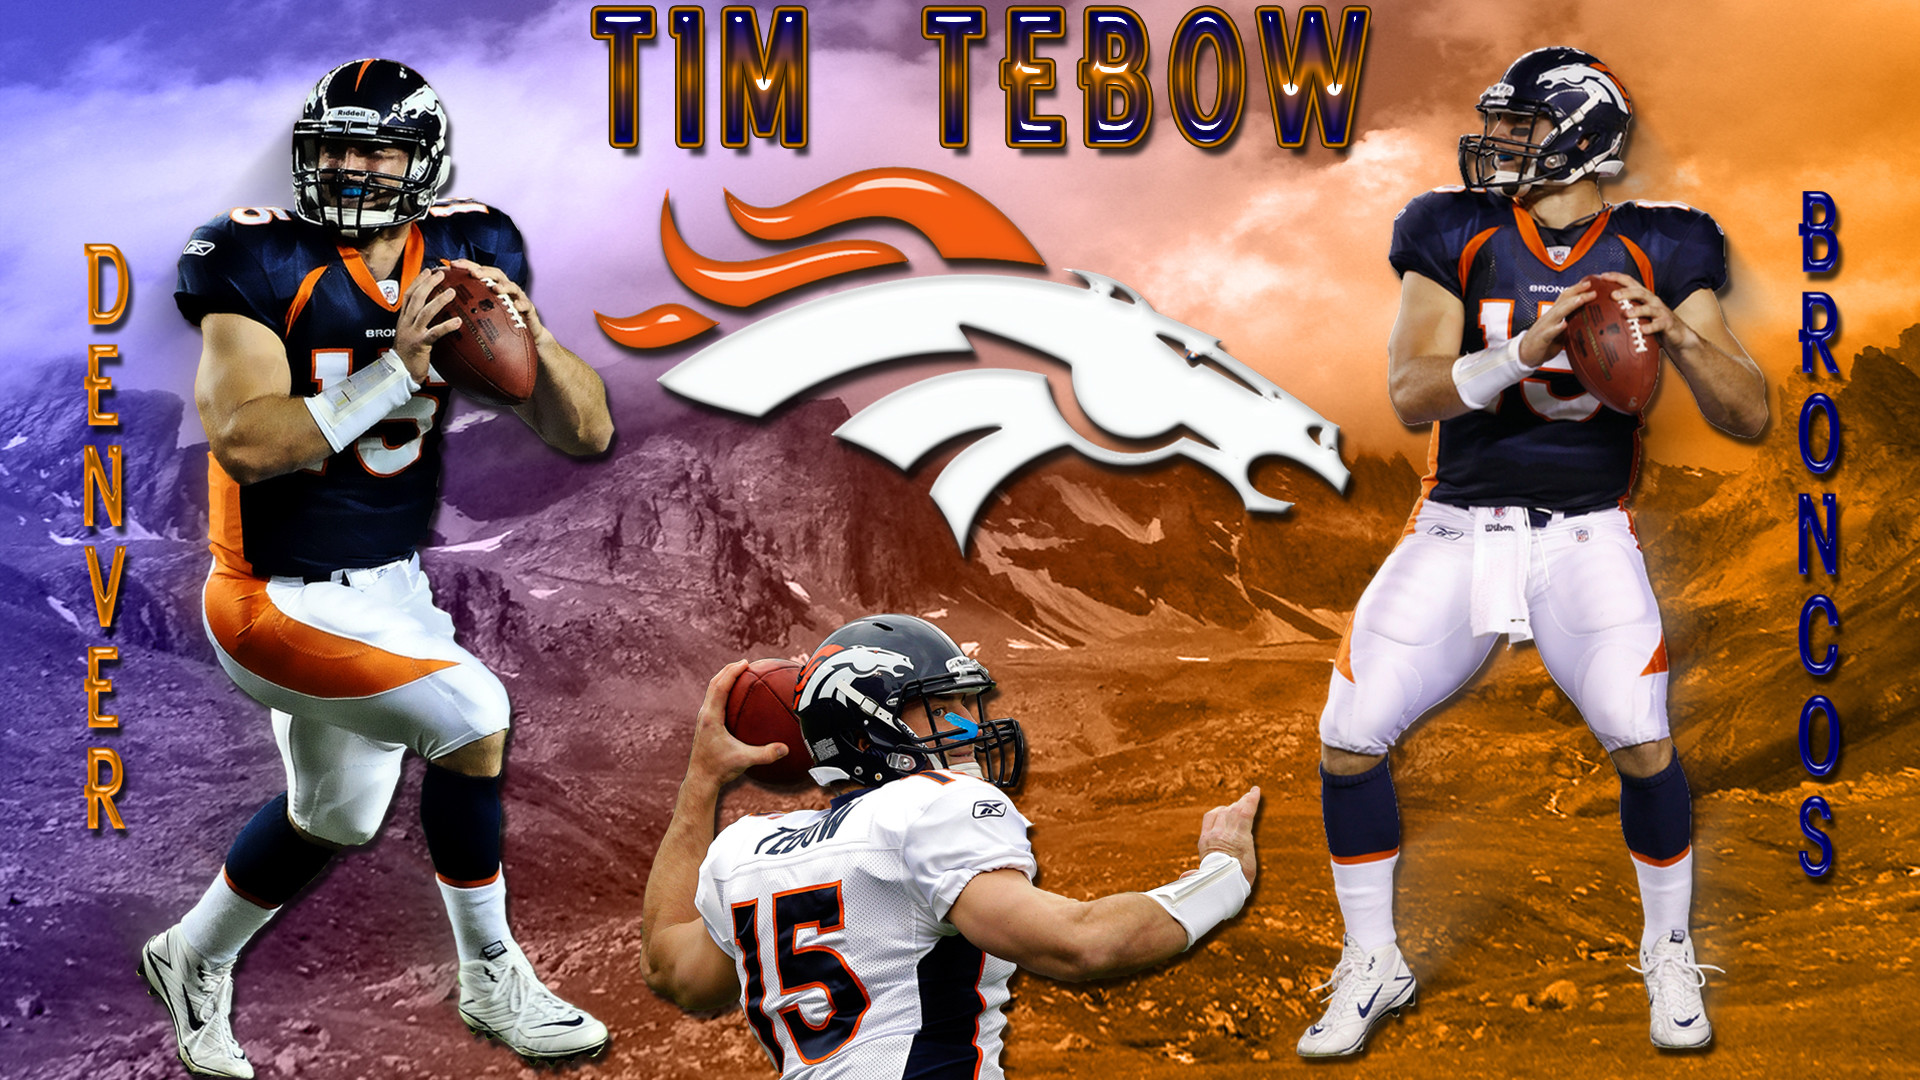 1920x1080 ... x 1080 | 1920 x 1200. Tim Tebow Denver Broncos Wallpaper.